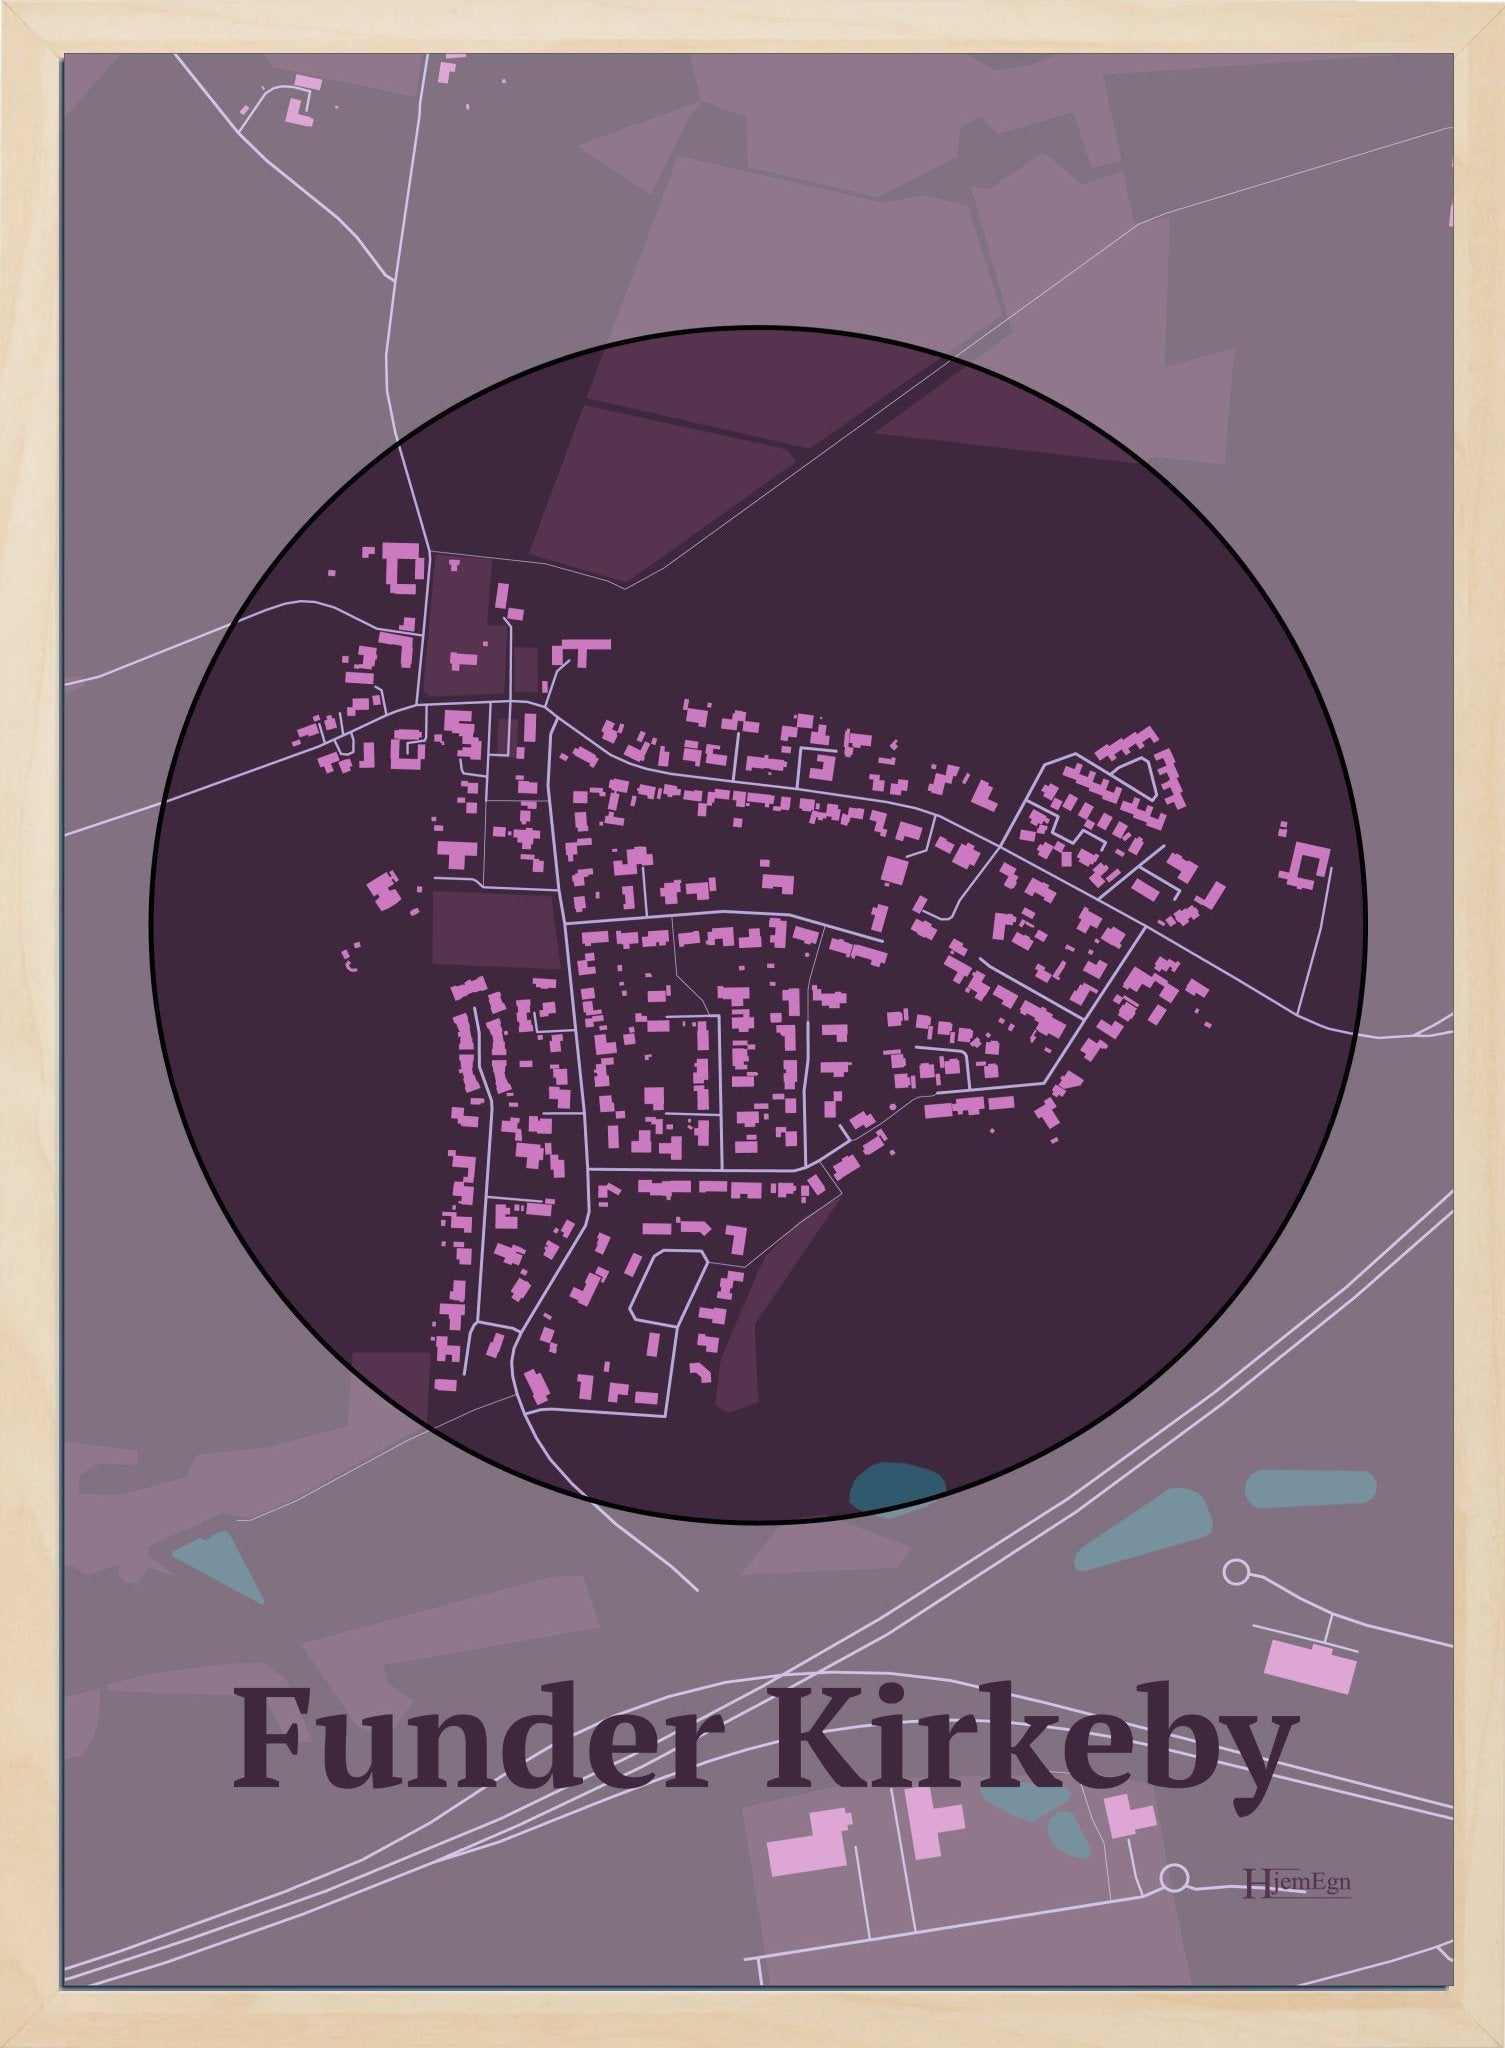 Funder Kirkeby plakat i farve mørk rød og HjemEgn.dk design centrum. Design bykort for Funder Kirkeby